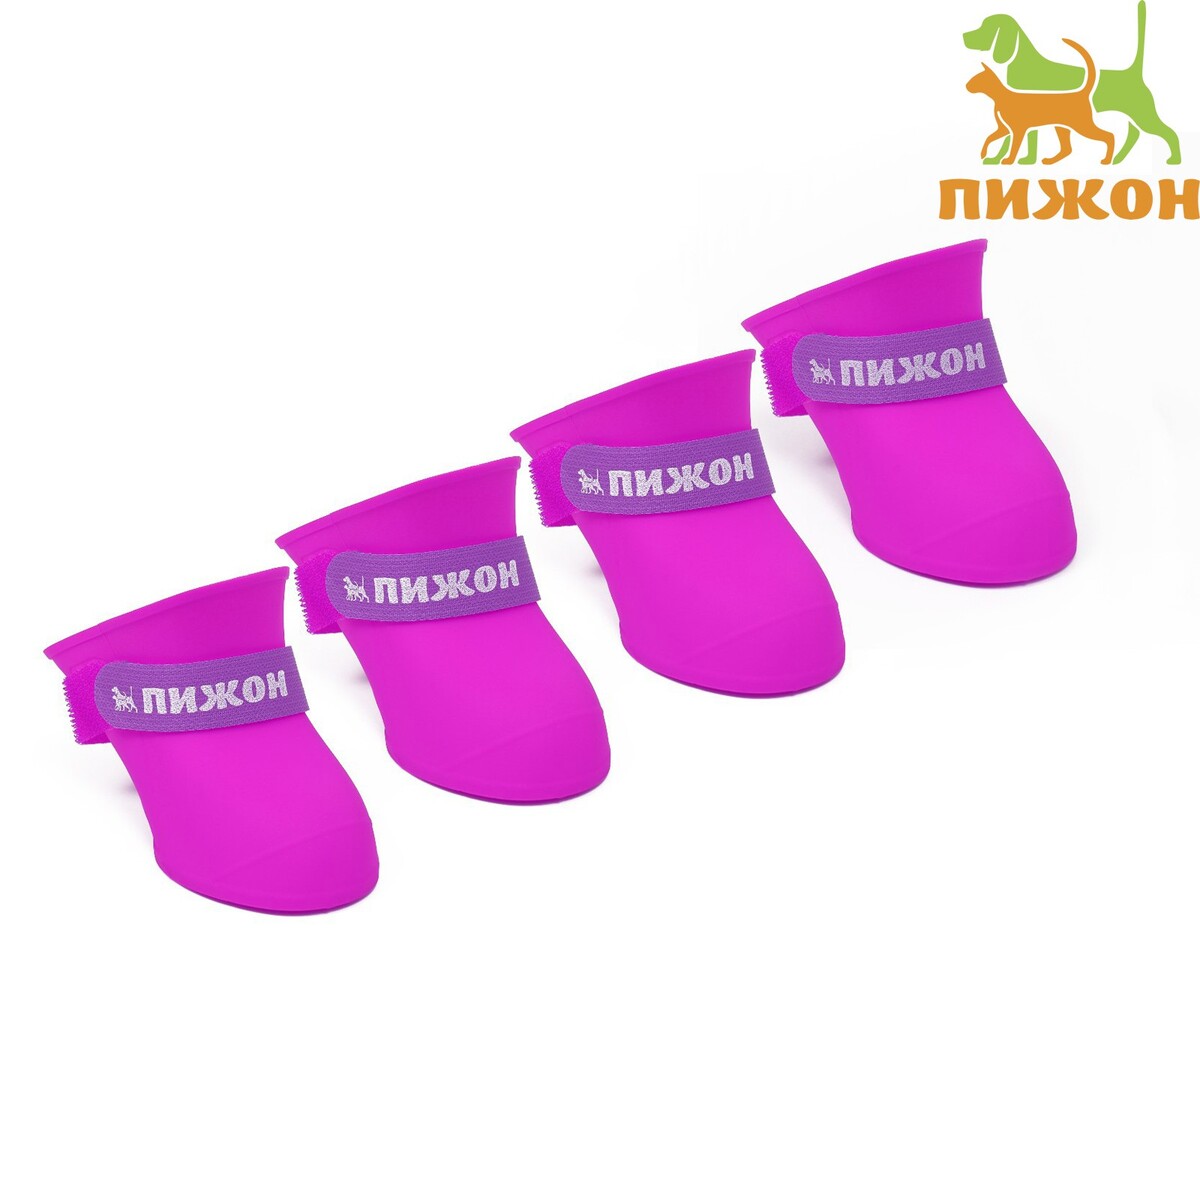 Сапоги резиновые пижон, набор 4 шт., р-р l (подошва 5.7 х 4.5 см), фиолетовые сапоги резиновые